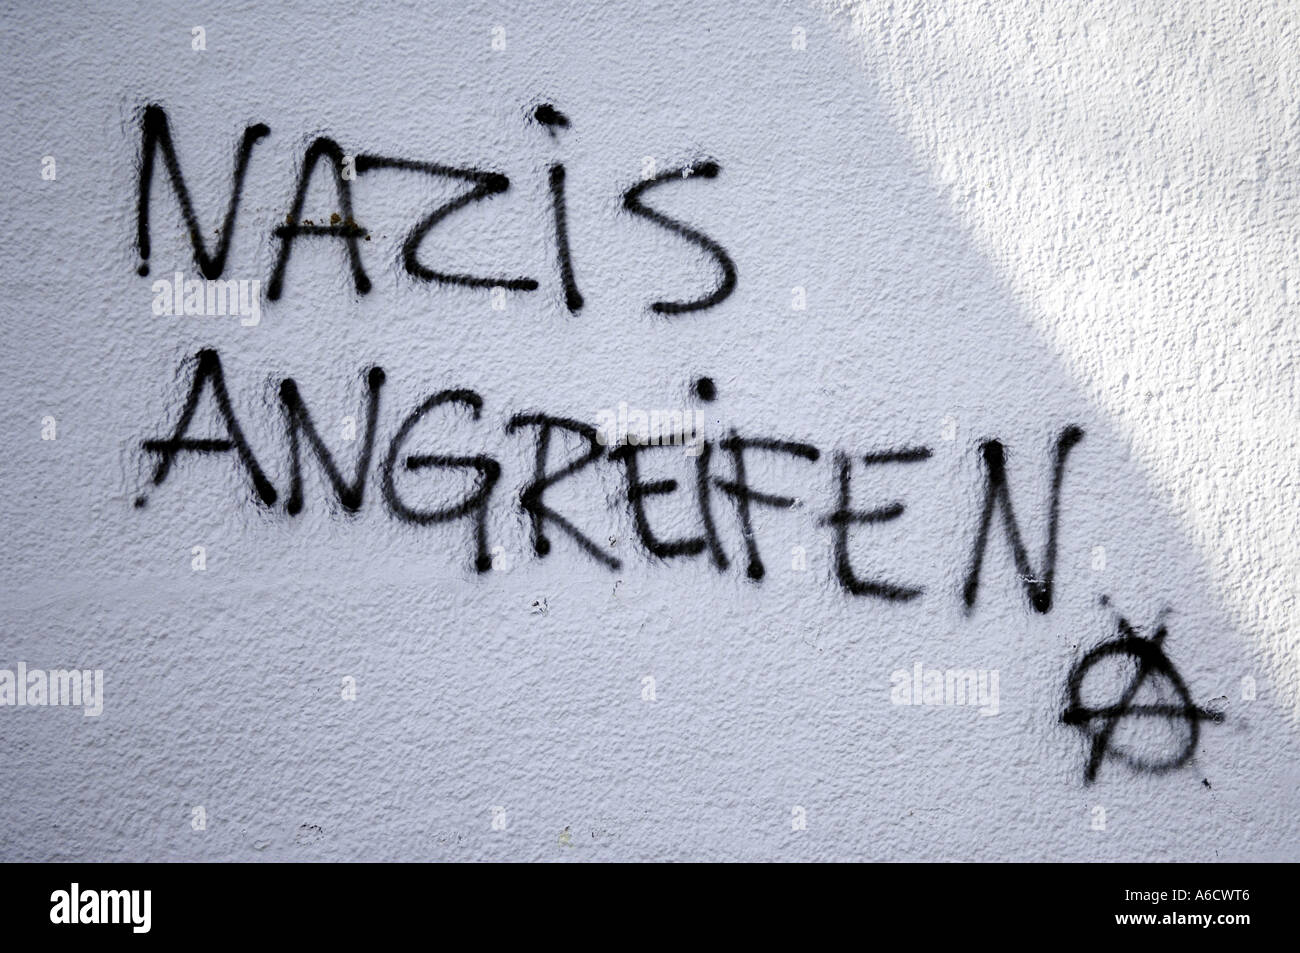 graffiti graf art arty crime criminal damage germany german deustch deutschalnd europe european colour color horizontal tag tagg Stock Photo